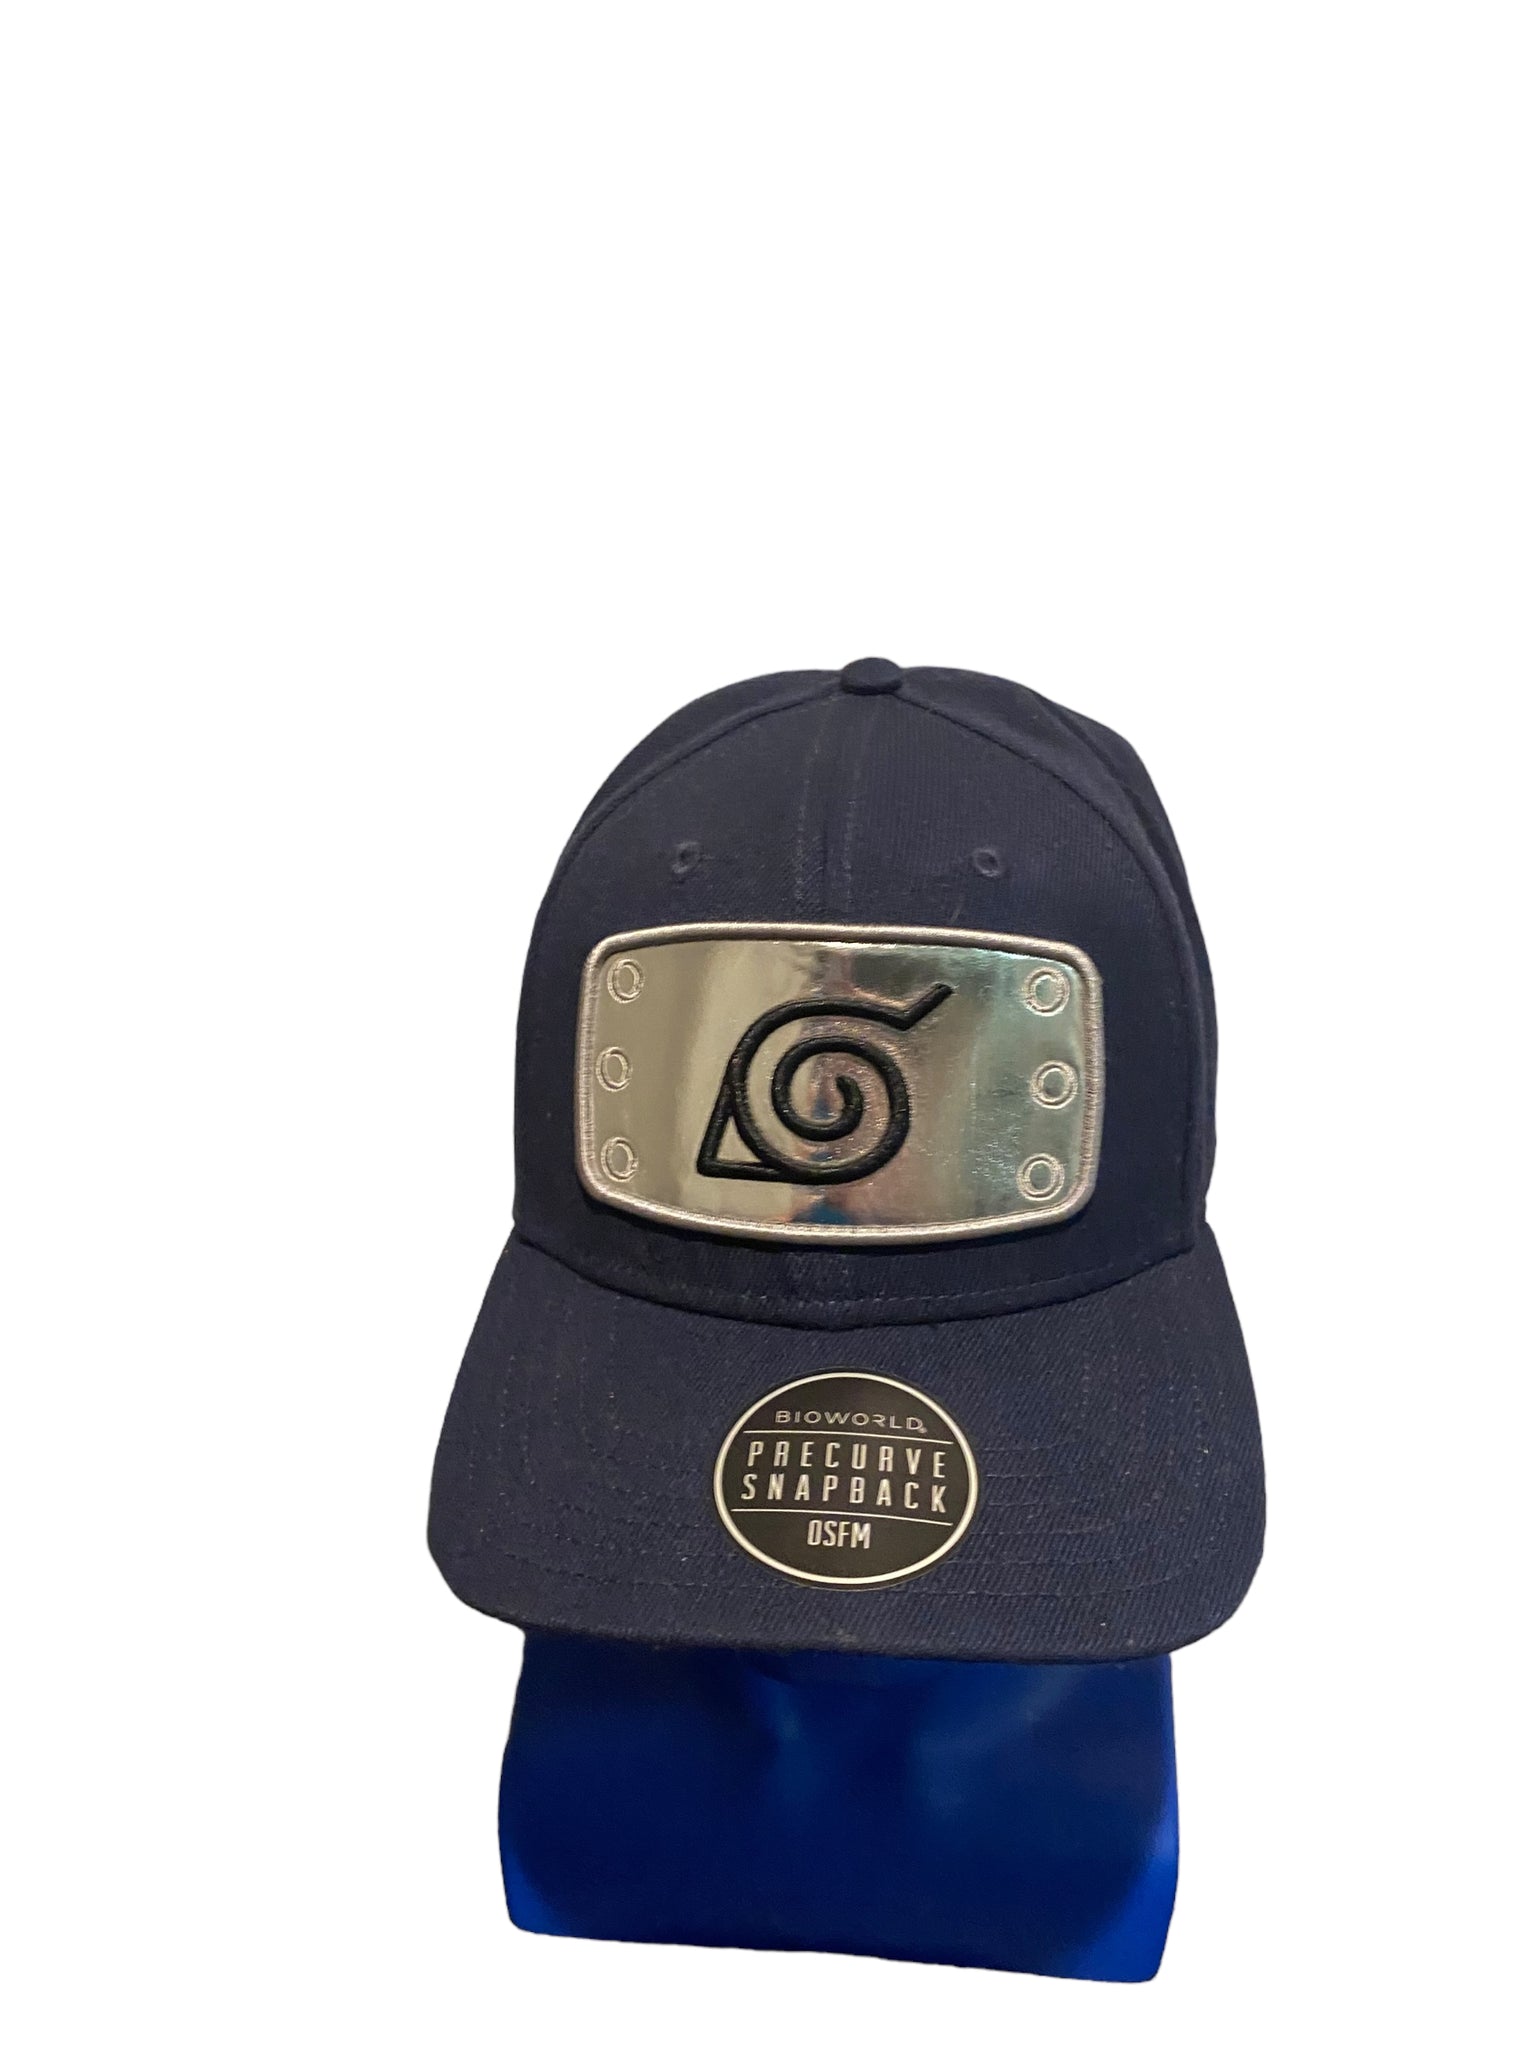 Naruto Shippuden Badge Adjustable Snapback Hat Cap OSFM Anime Manga